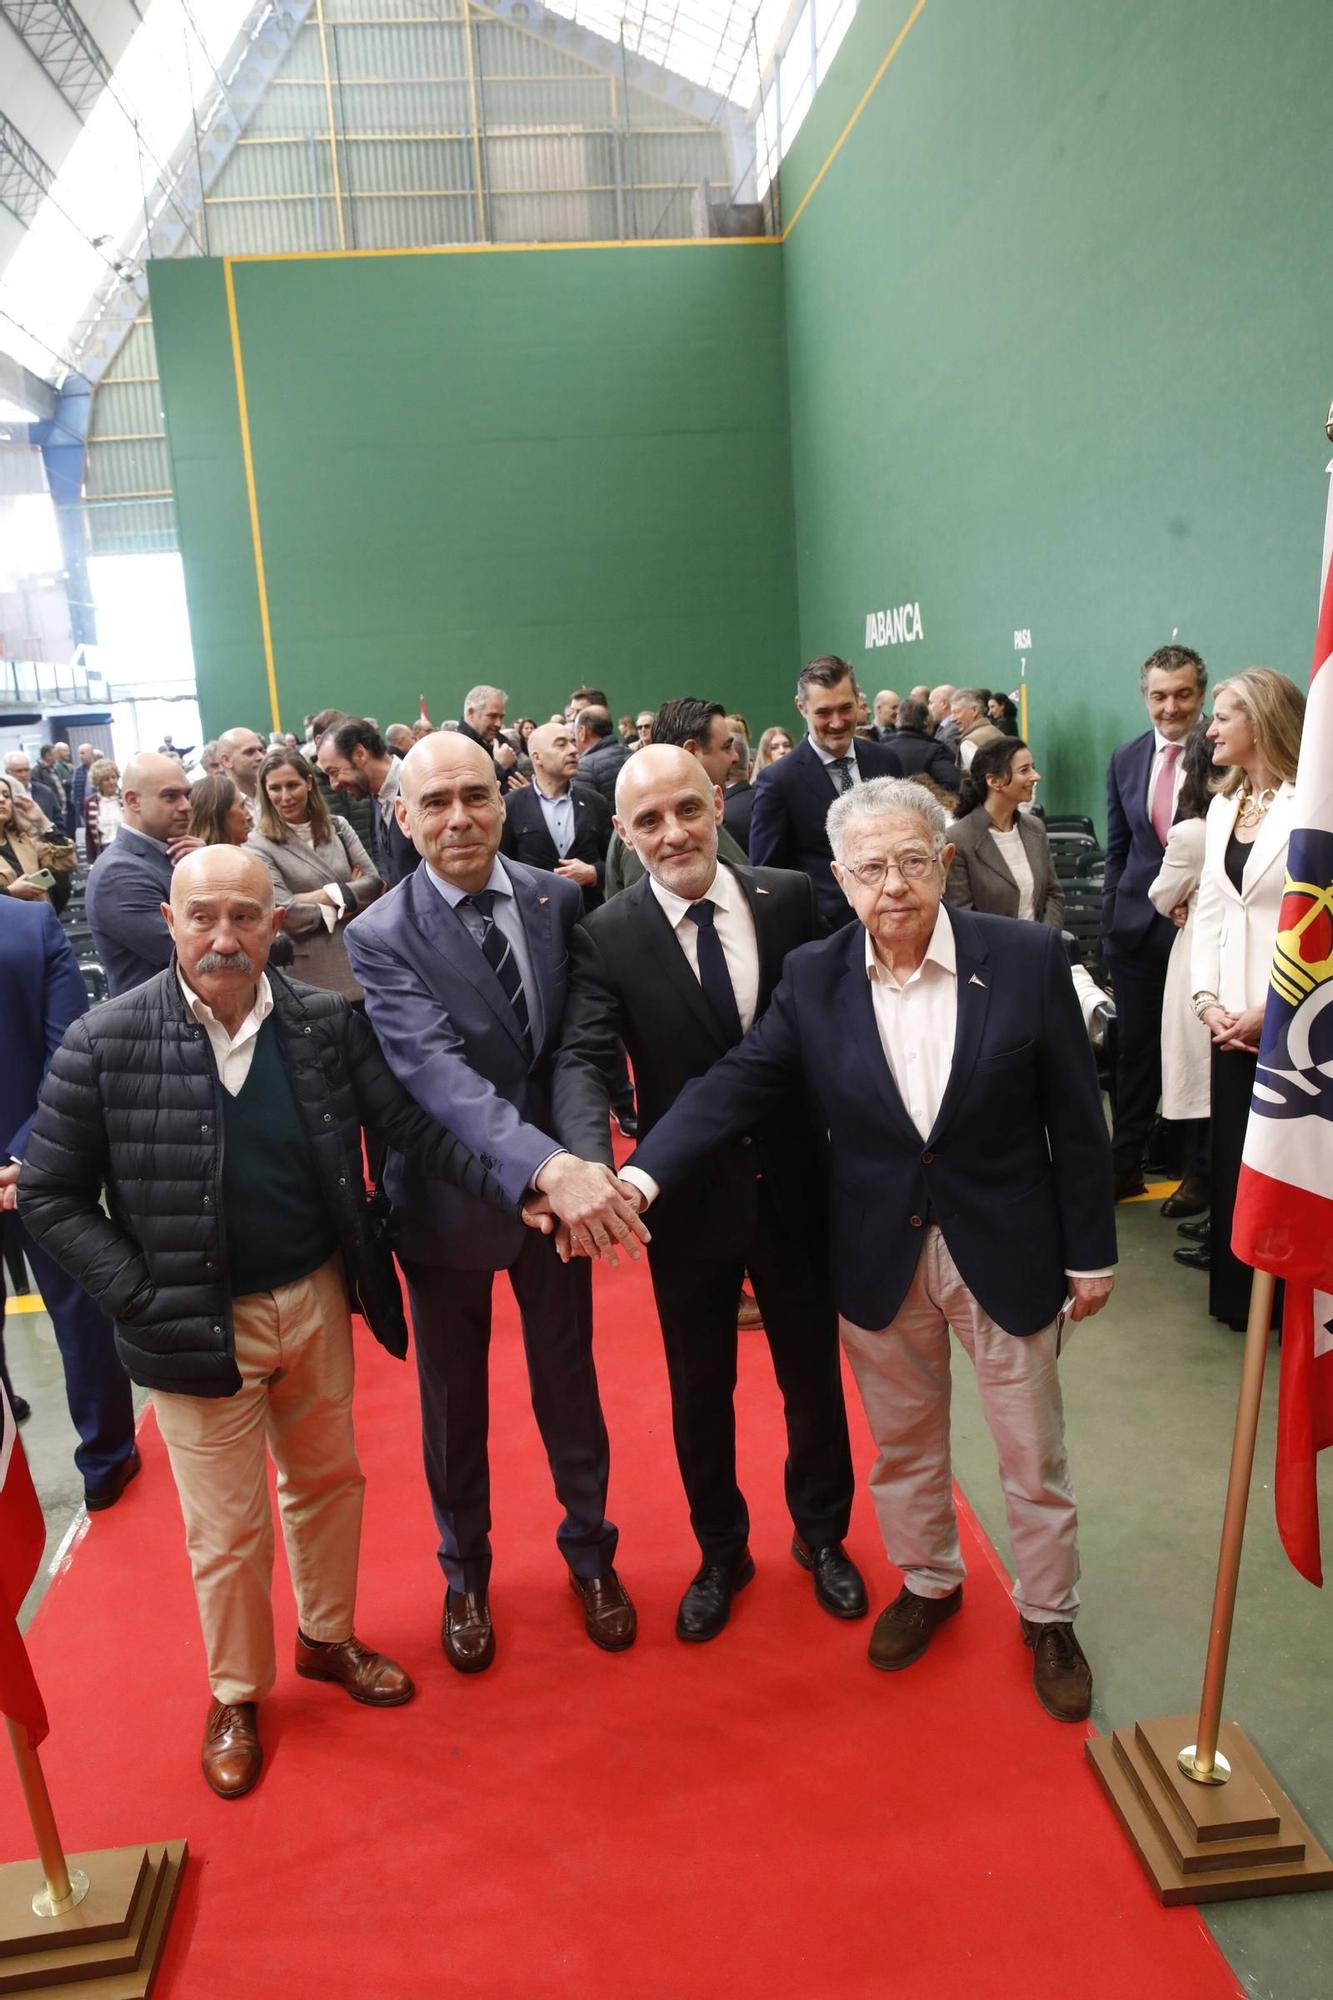 EN IMÁGENES: Joaquín Miranda toma posesión como presidente del Grupo Covadonga